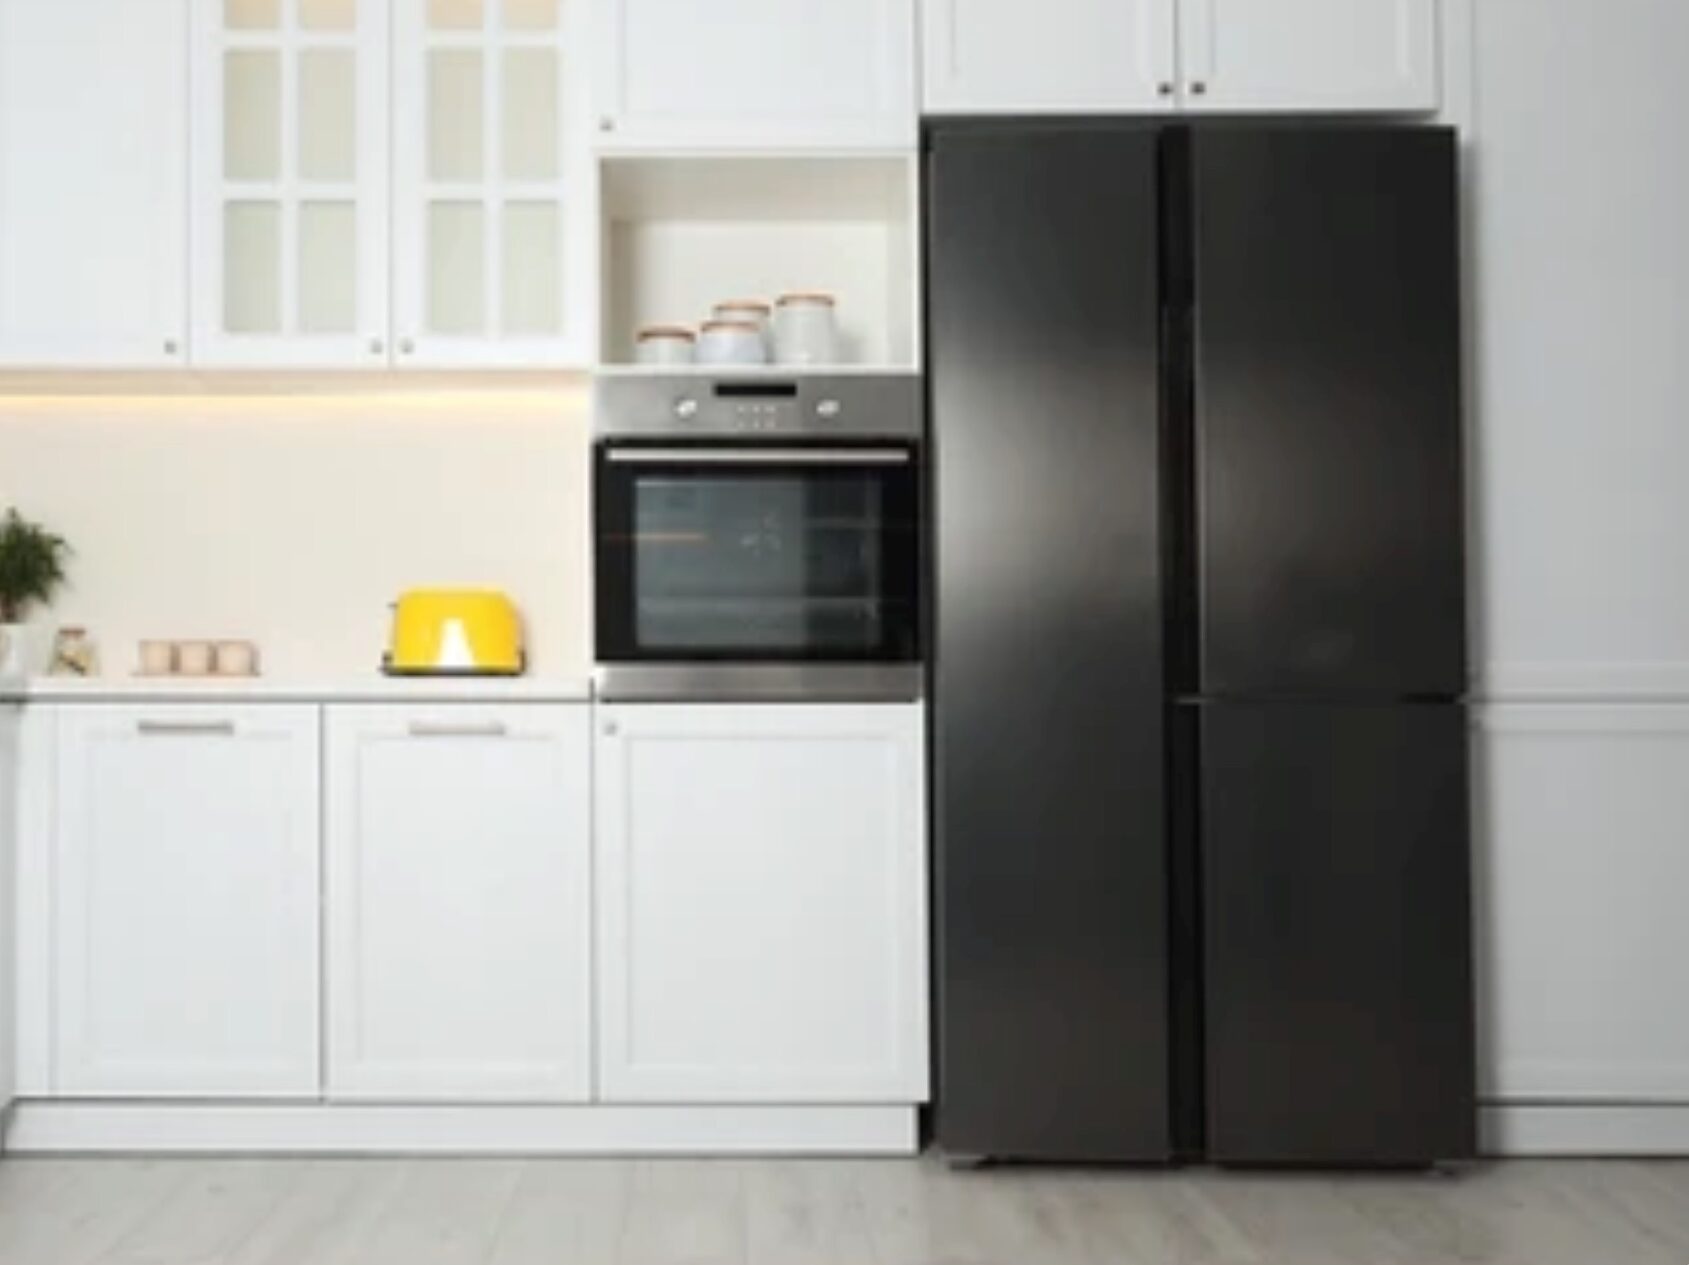 Fridge Refrigerator and Freezer Repair